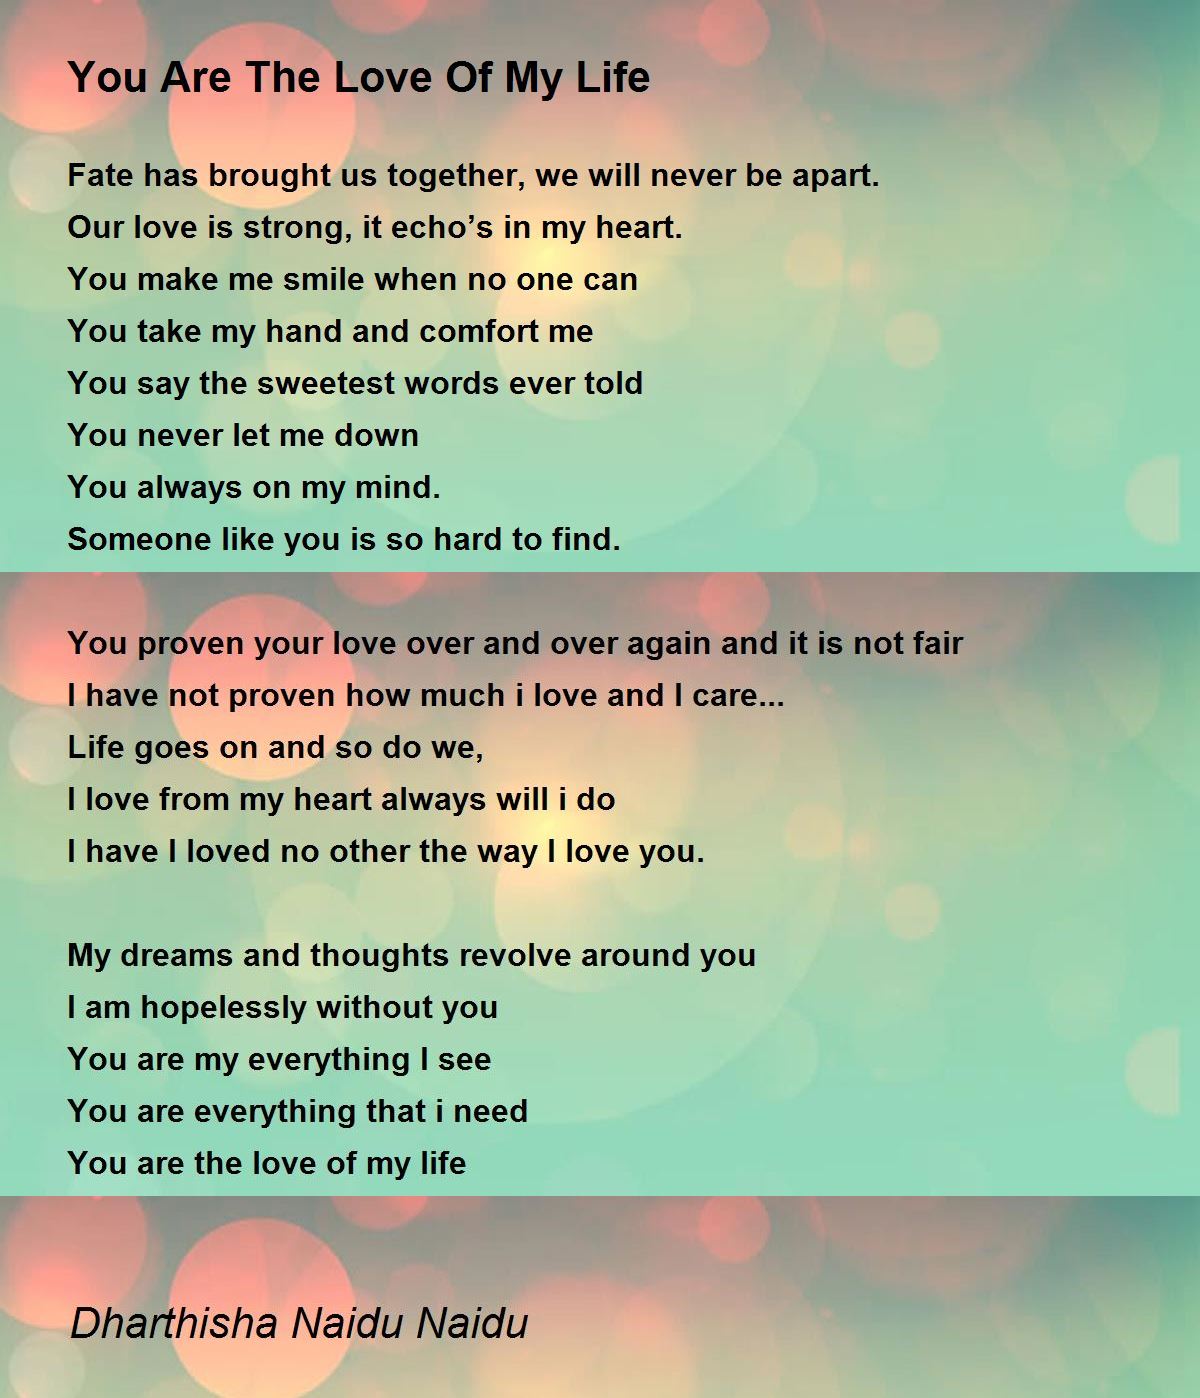 Read You Are The Love Of My Life poem by Dharthisha Naidu Naidu written. 